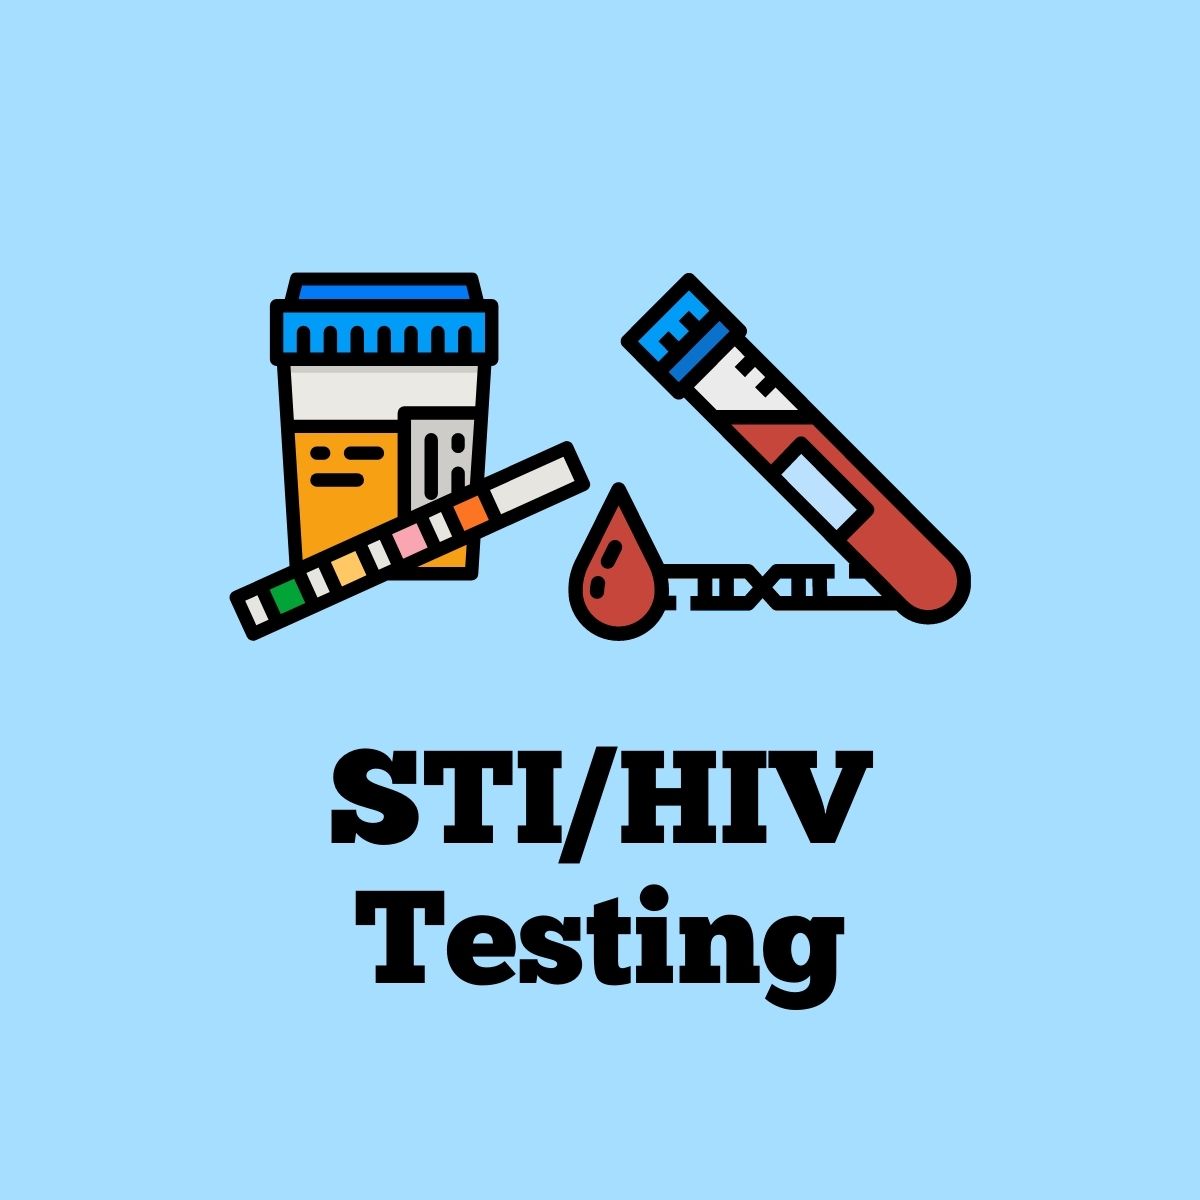 STI/HIV Testing